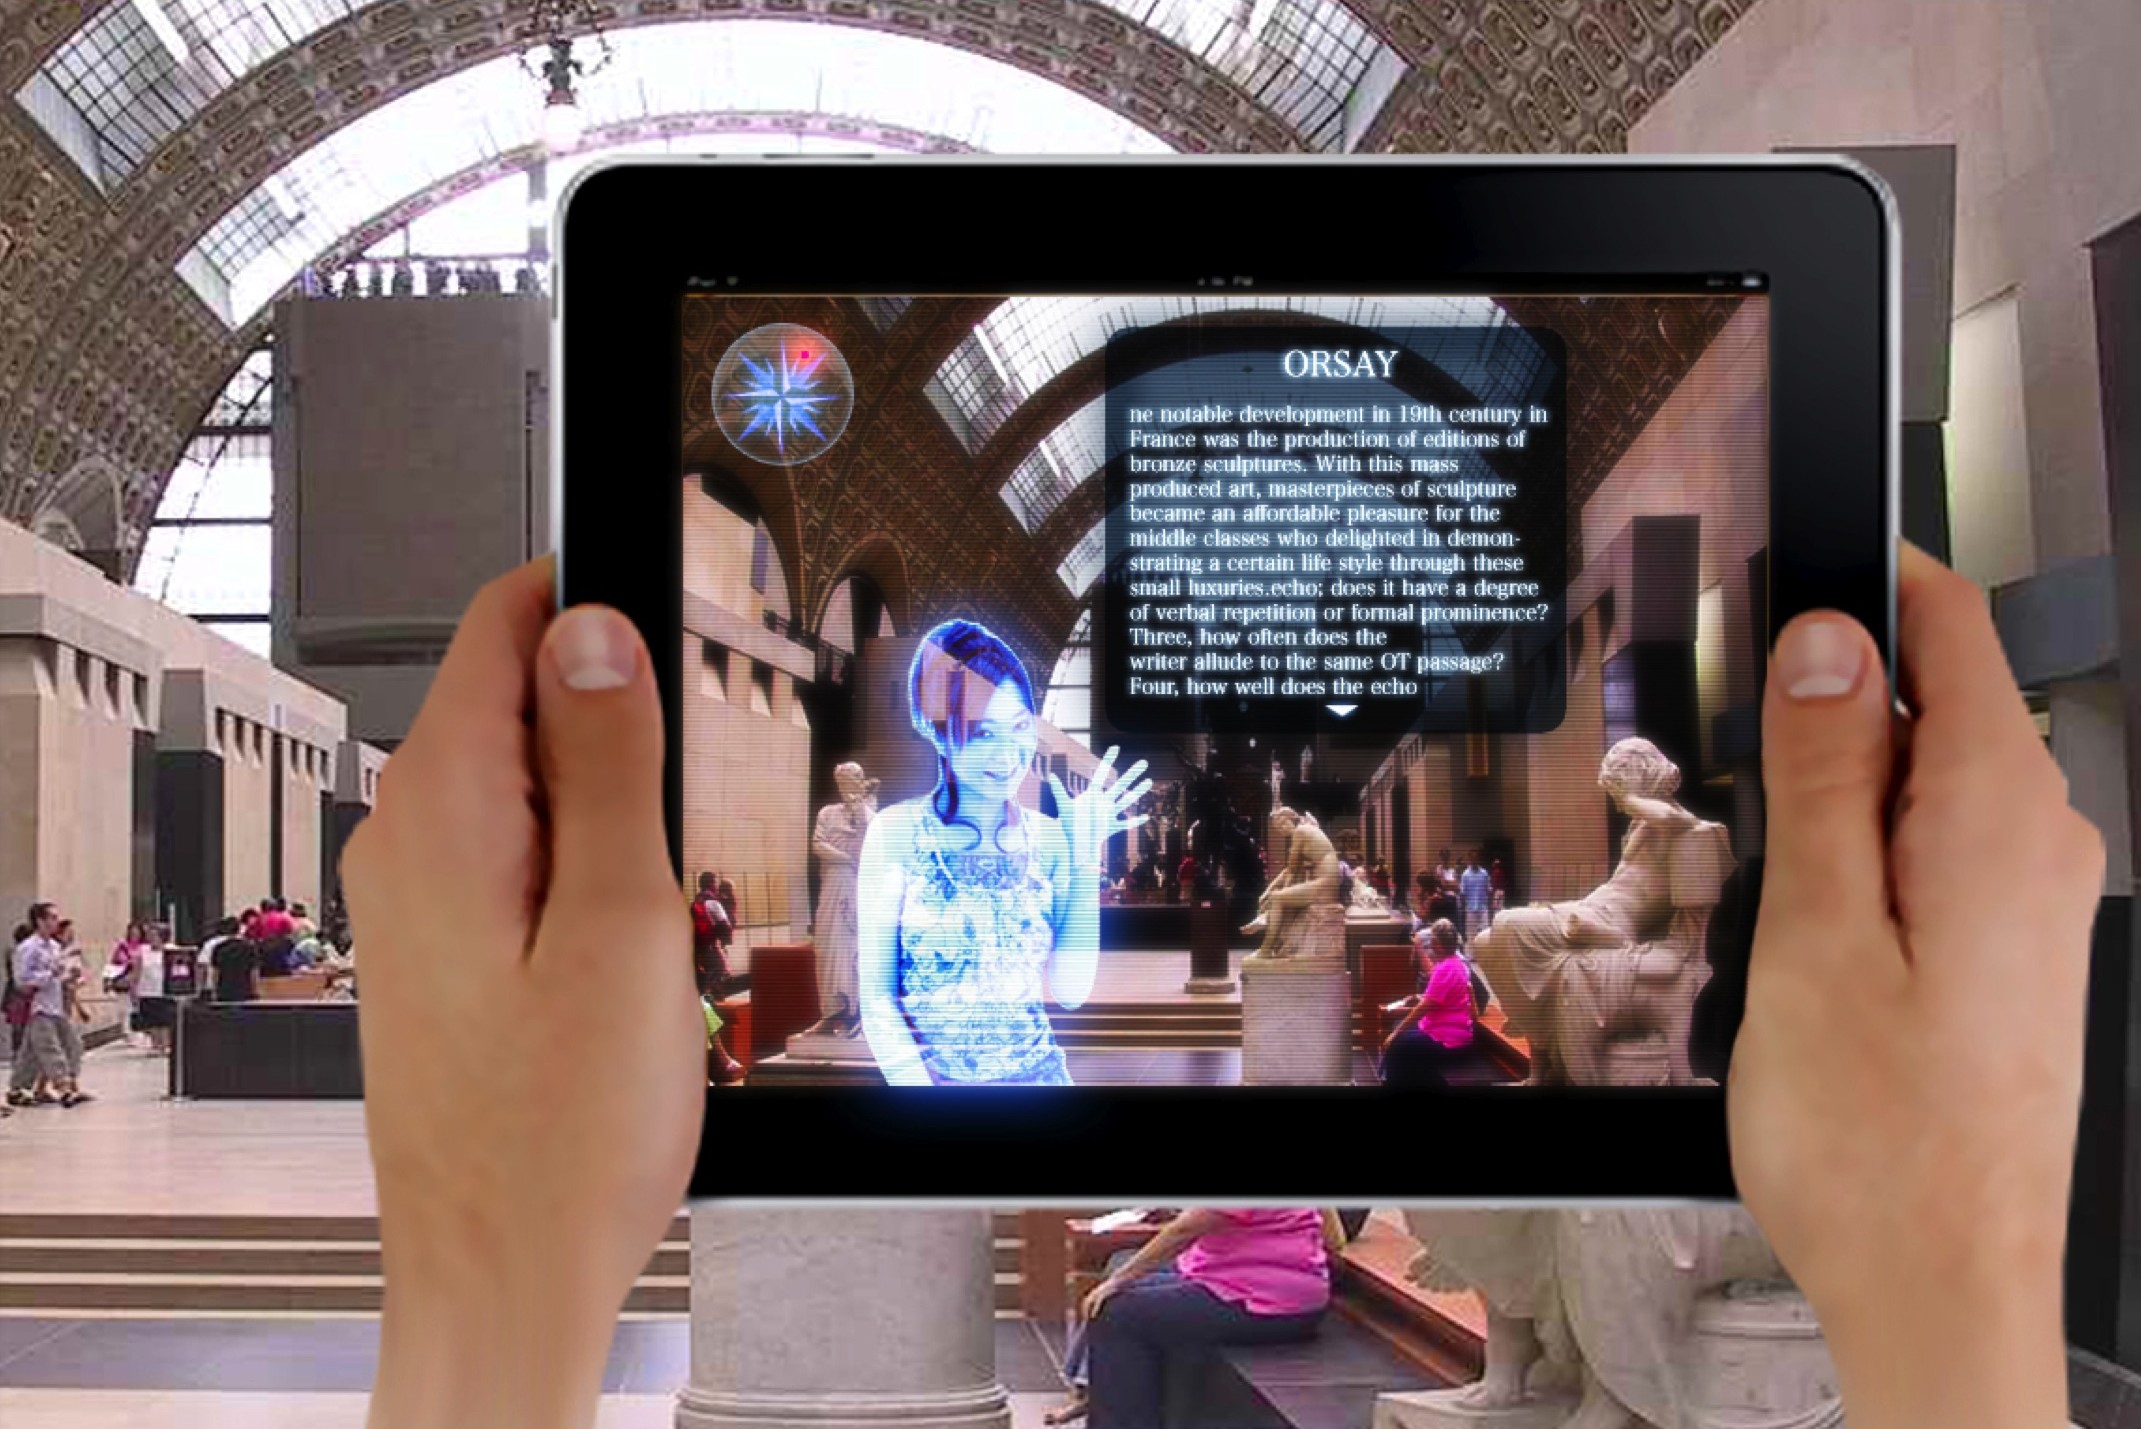 RicercAttiva - Realtà aumentata o augmented reality - Spiega